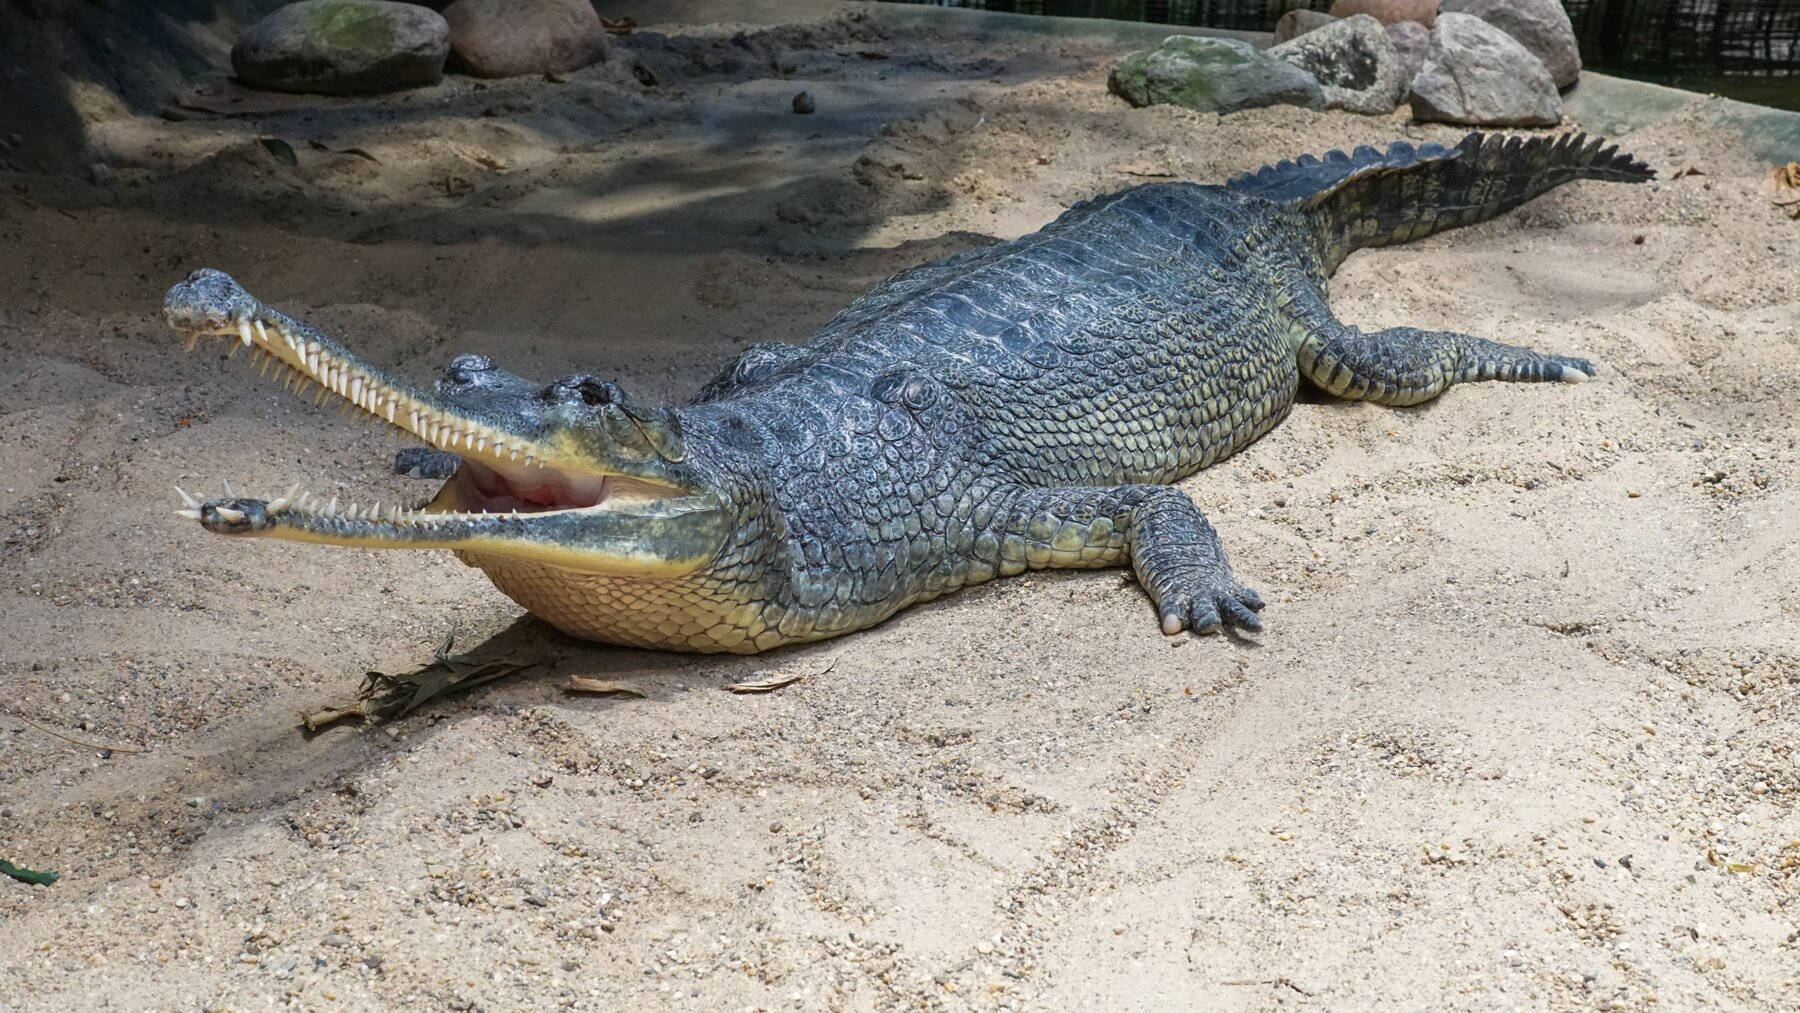 Majestic Gavial Crocodile in Its Natural Habitat Wallpaper